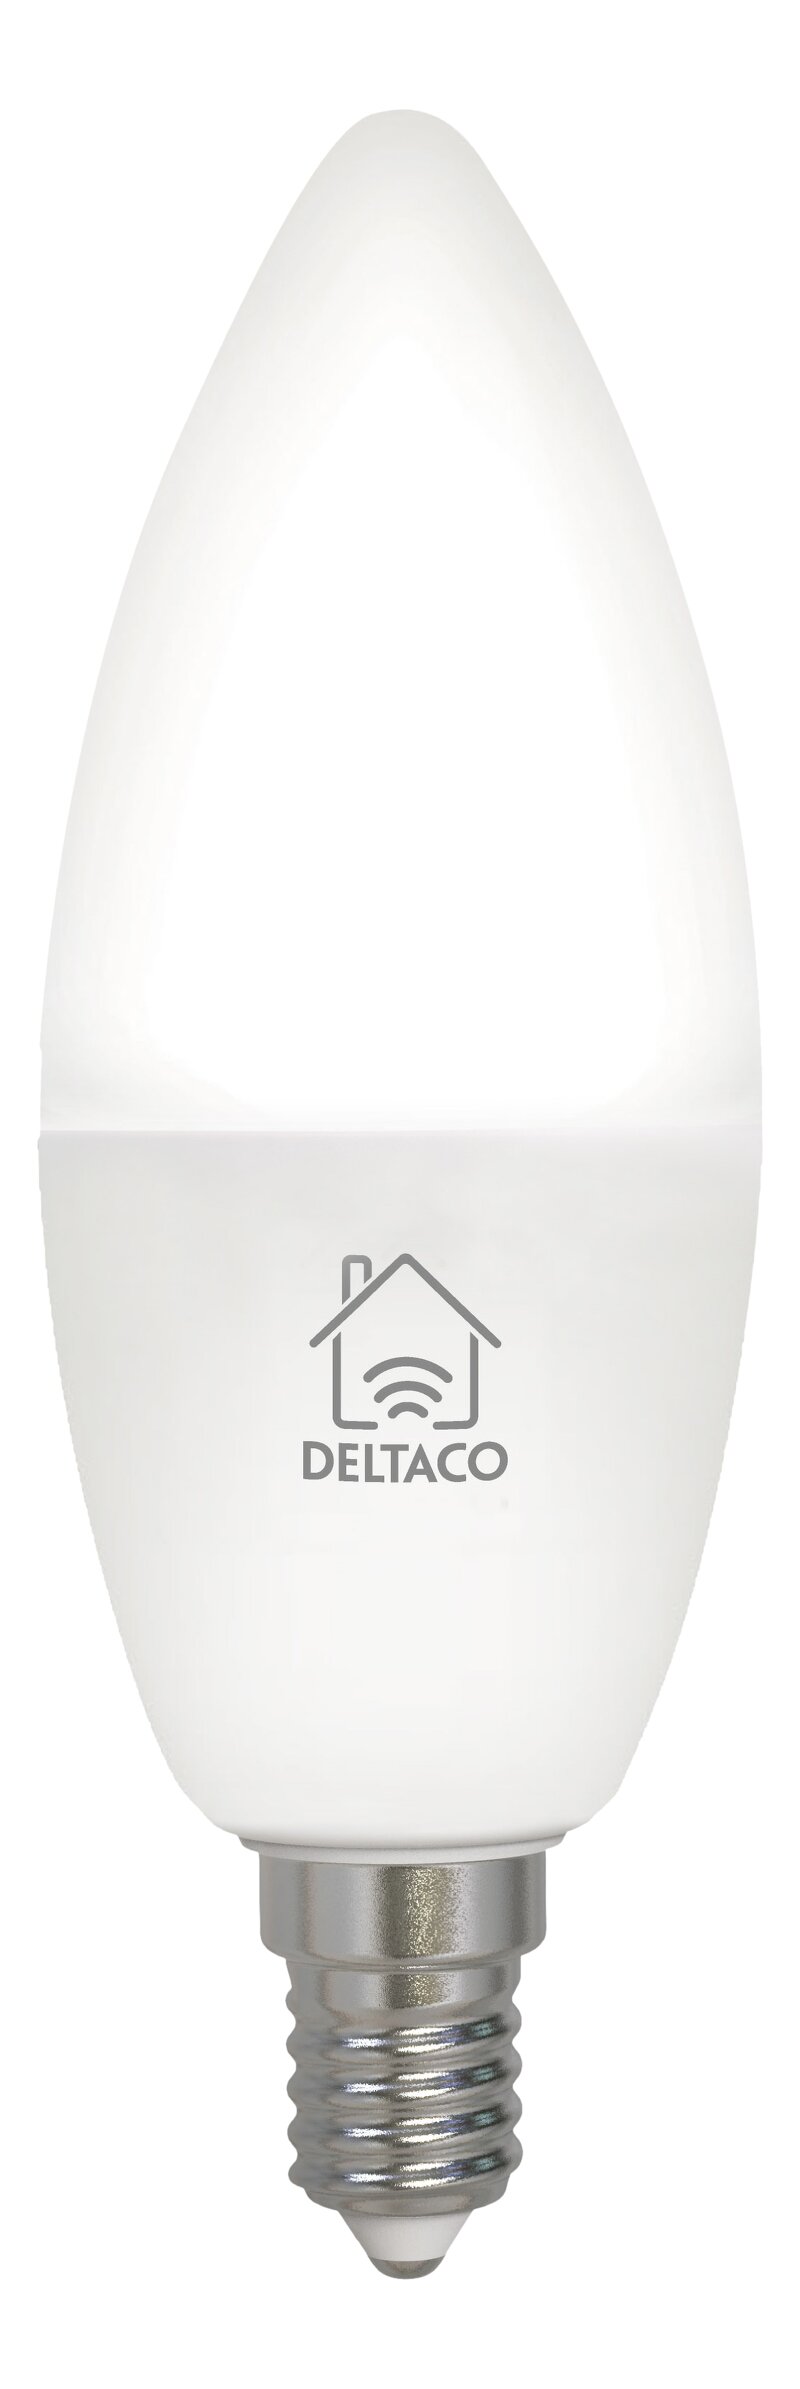 Deltaco Smart Home Smart Bulb – E14 / White